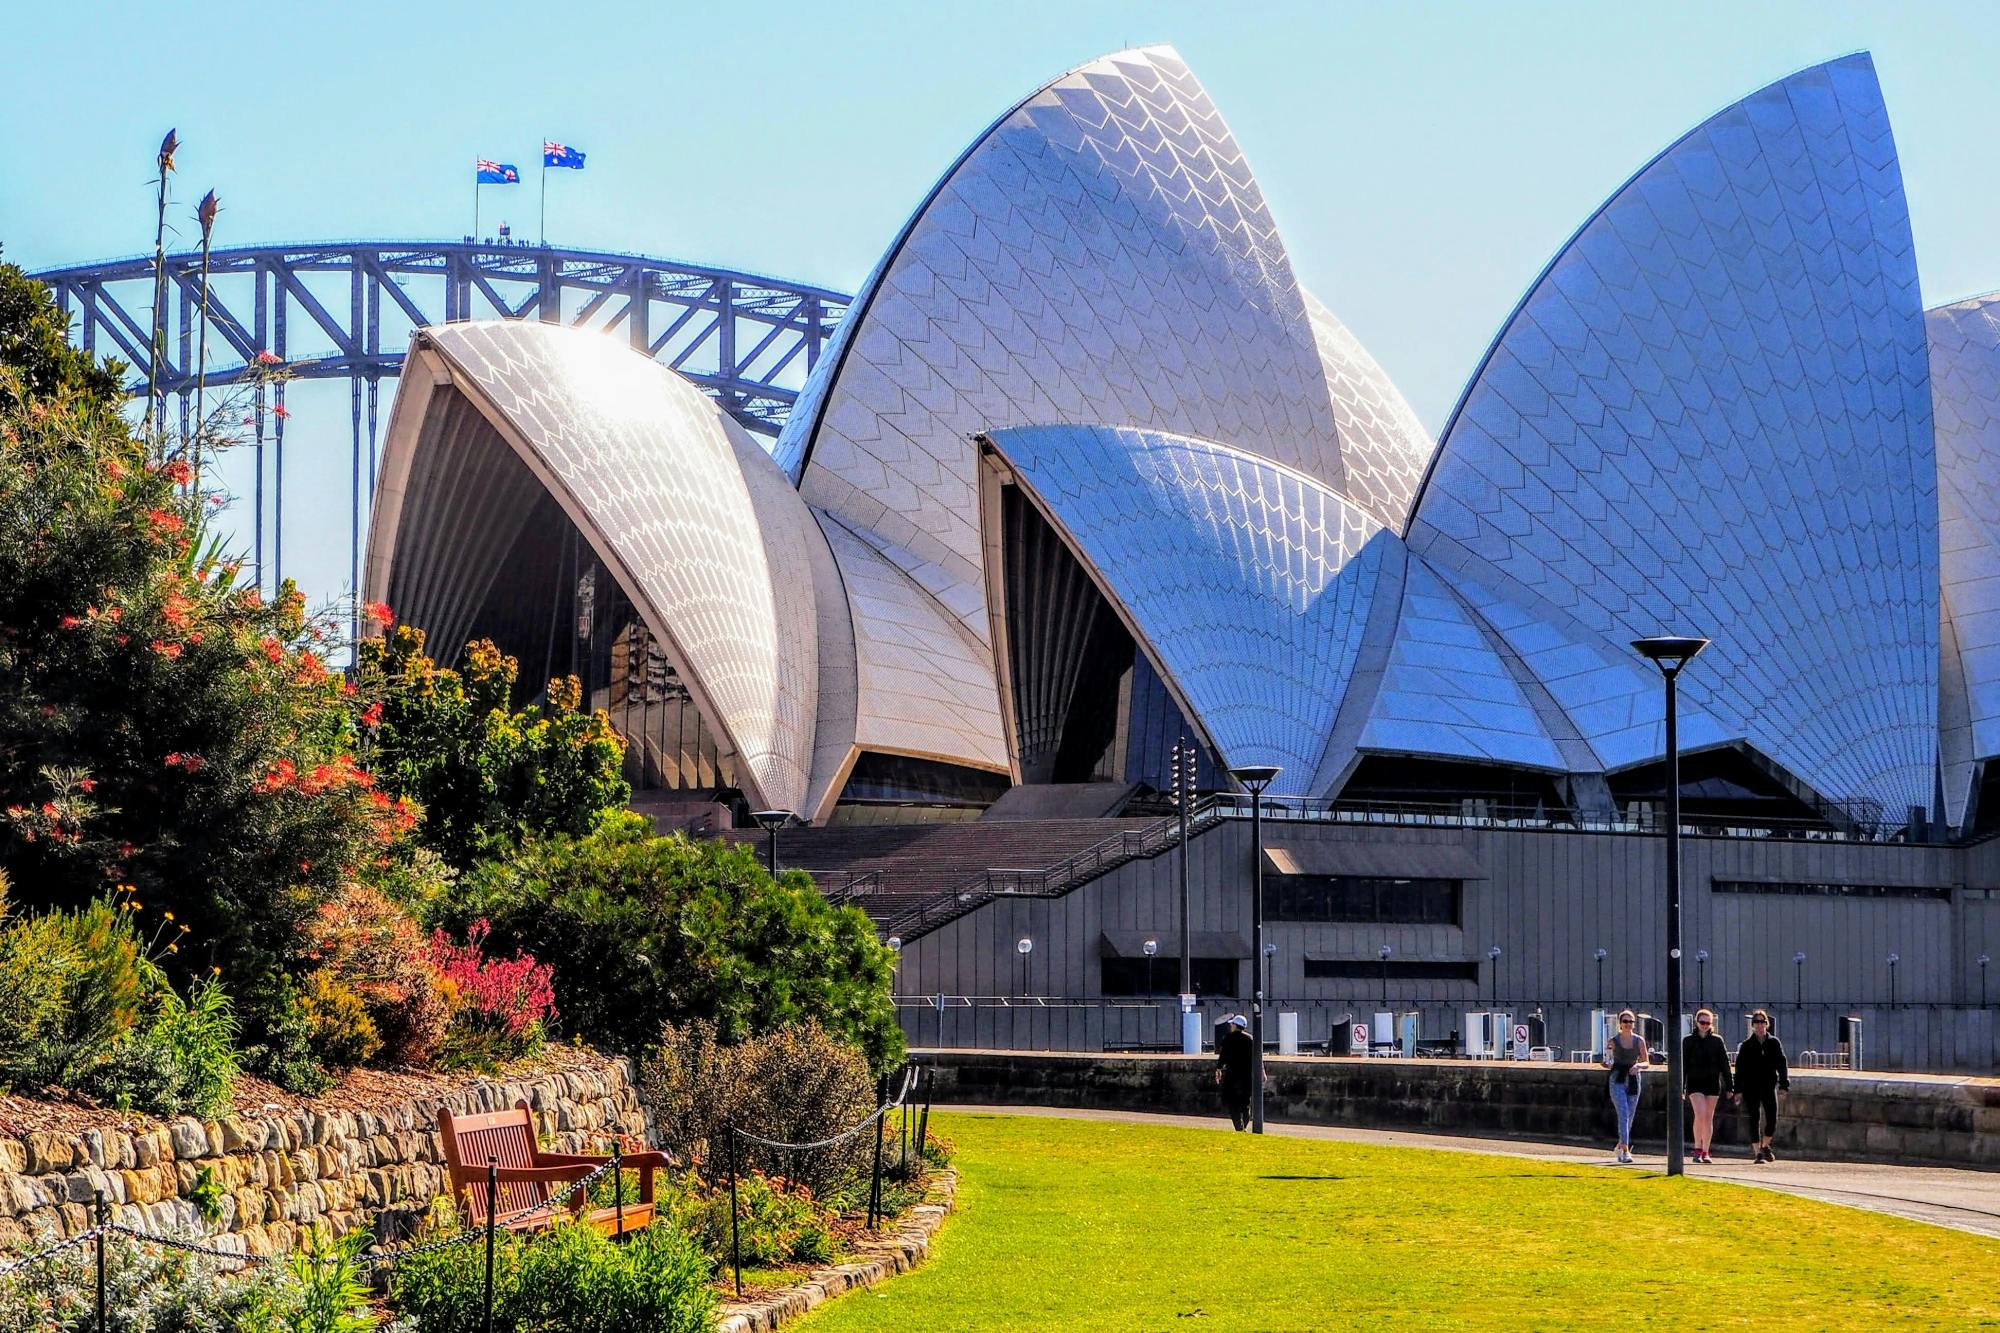 Sydney Harbour private walking tour with Aussie treats Musement